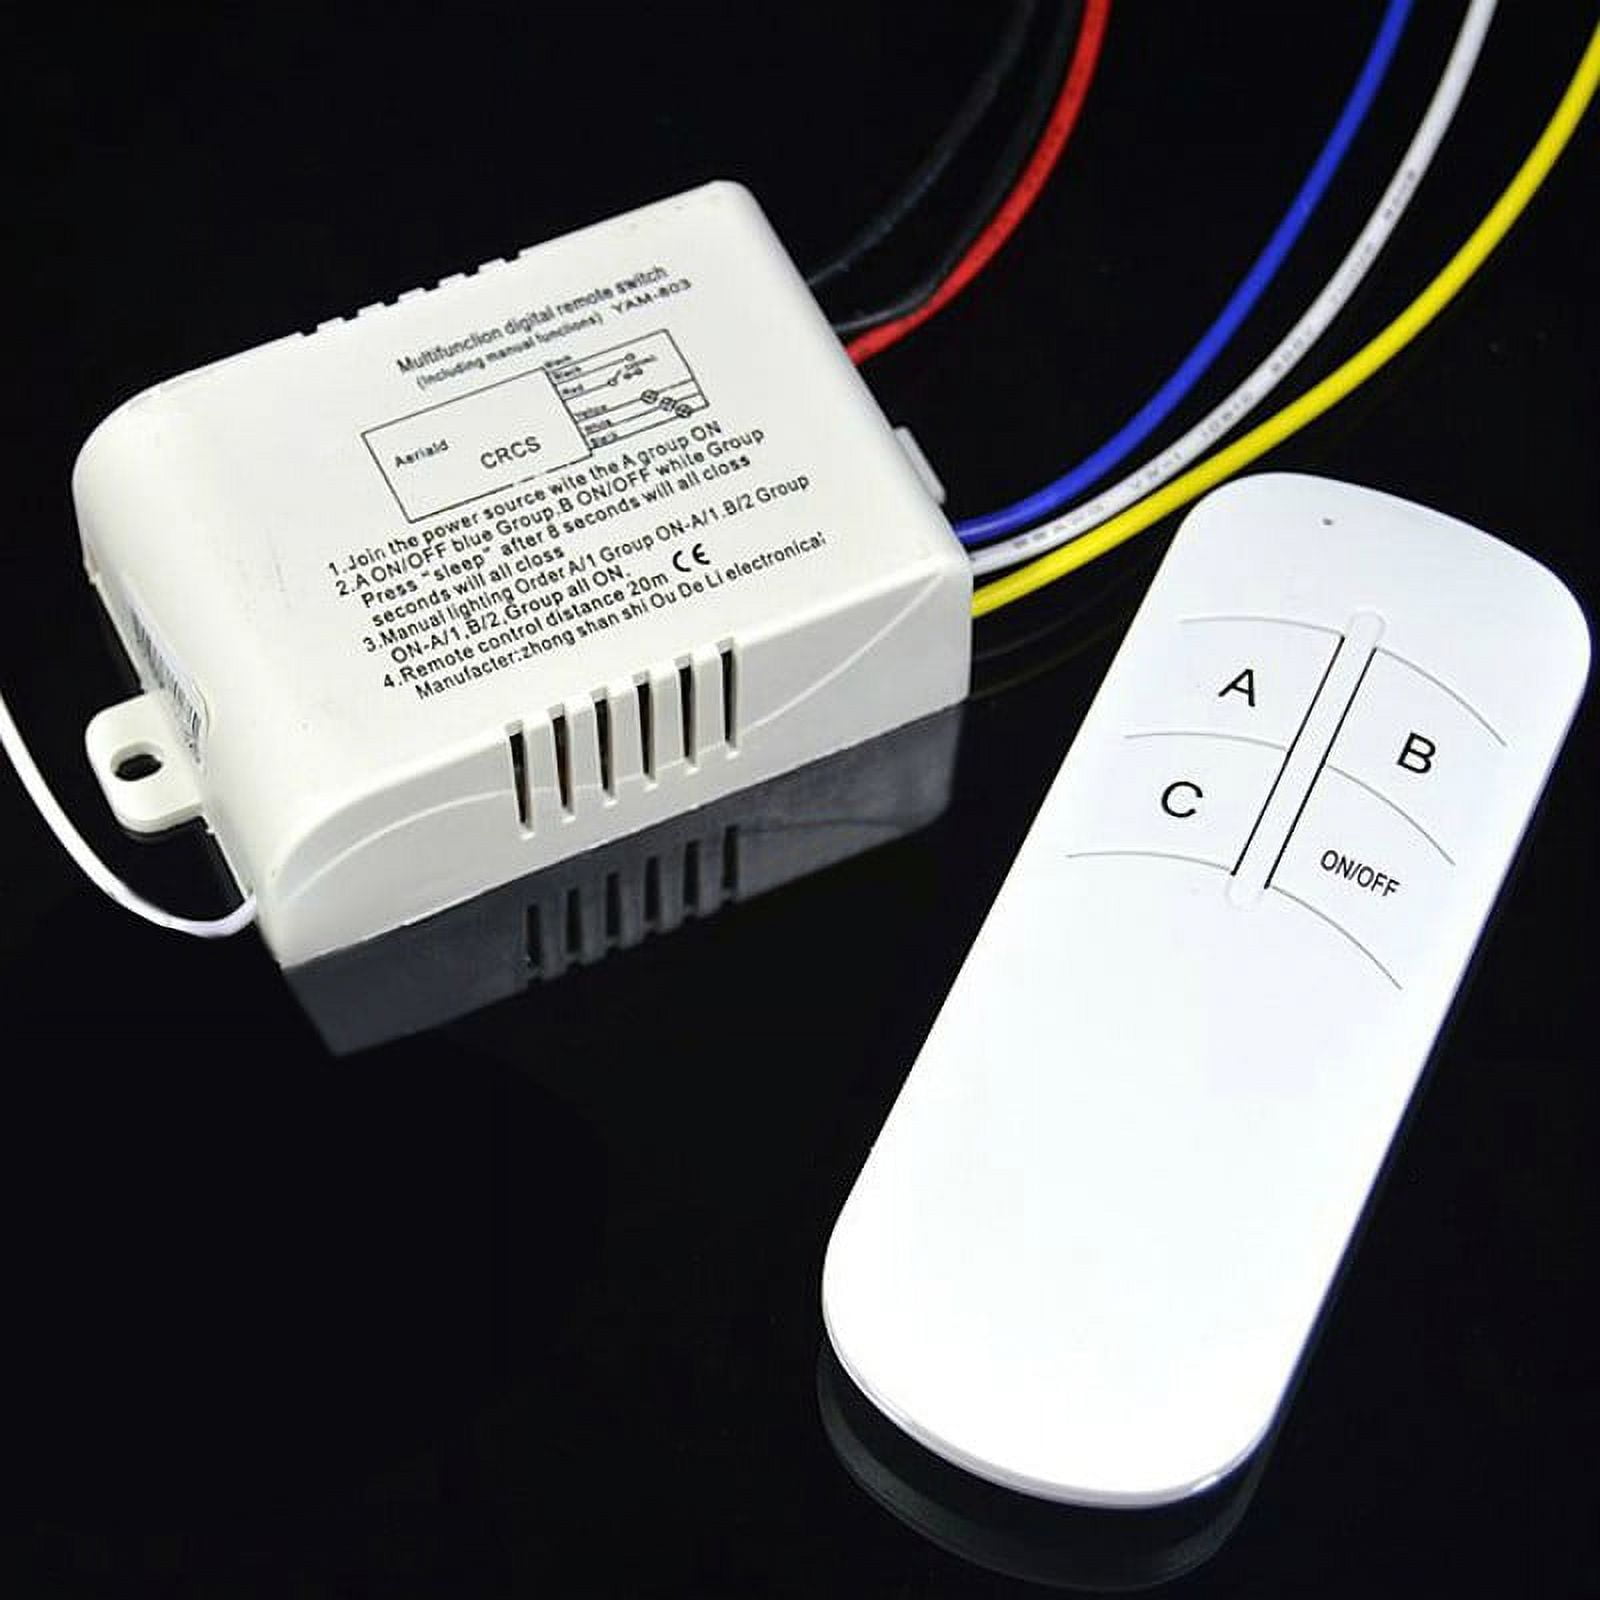 Suyin 1/2/3 Ways On/Off 220V Wireless Digital Lamp Light RF Remote Control Switch New